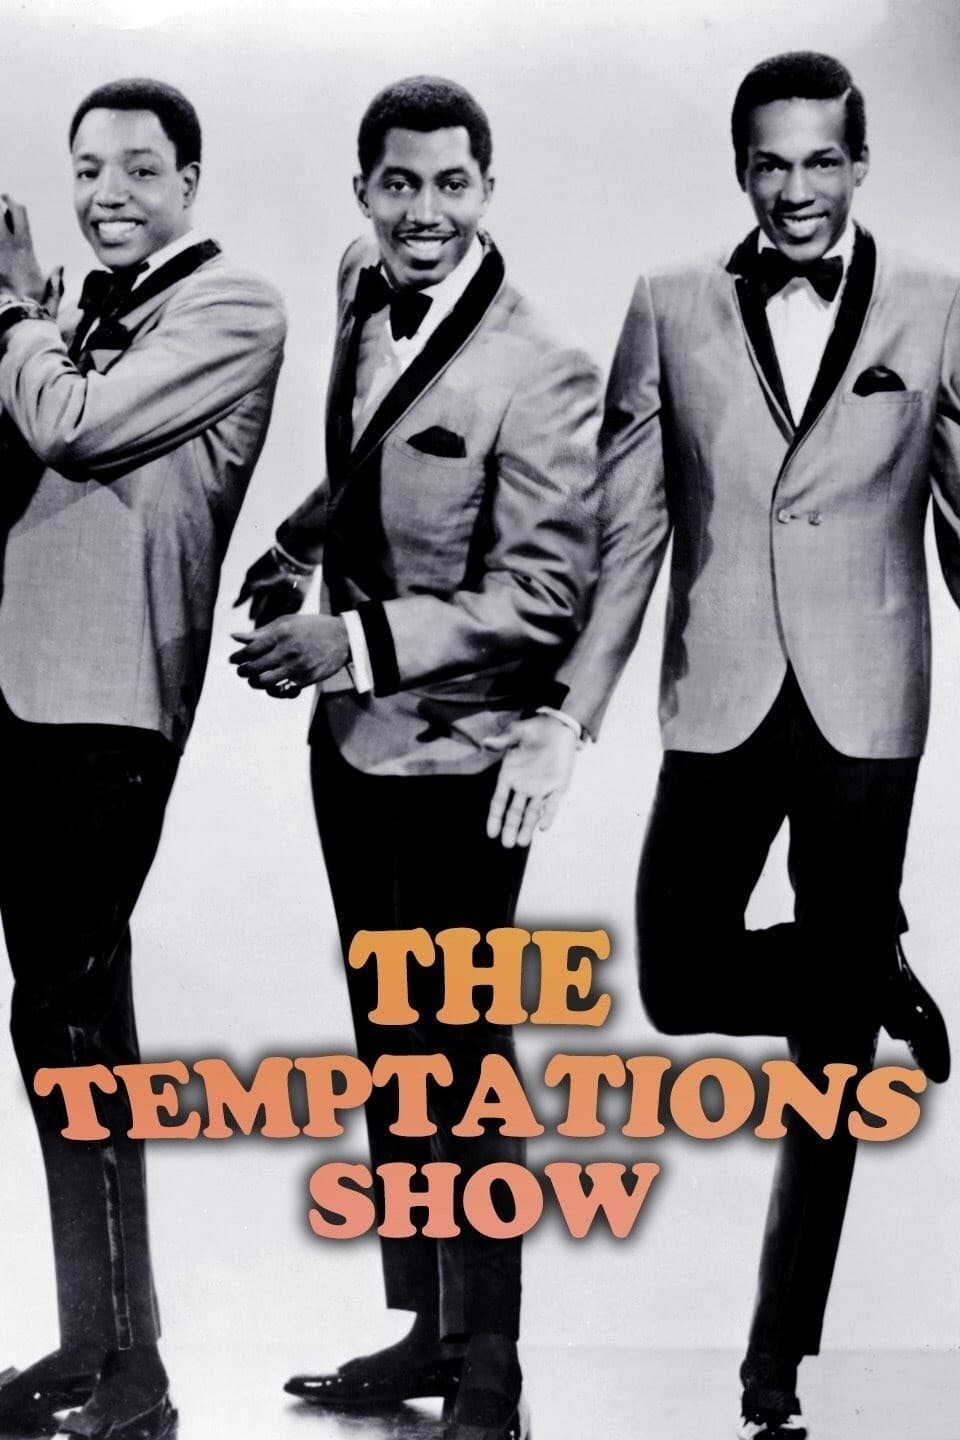 The Temptations Show